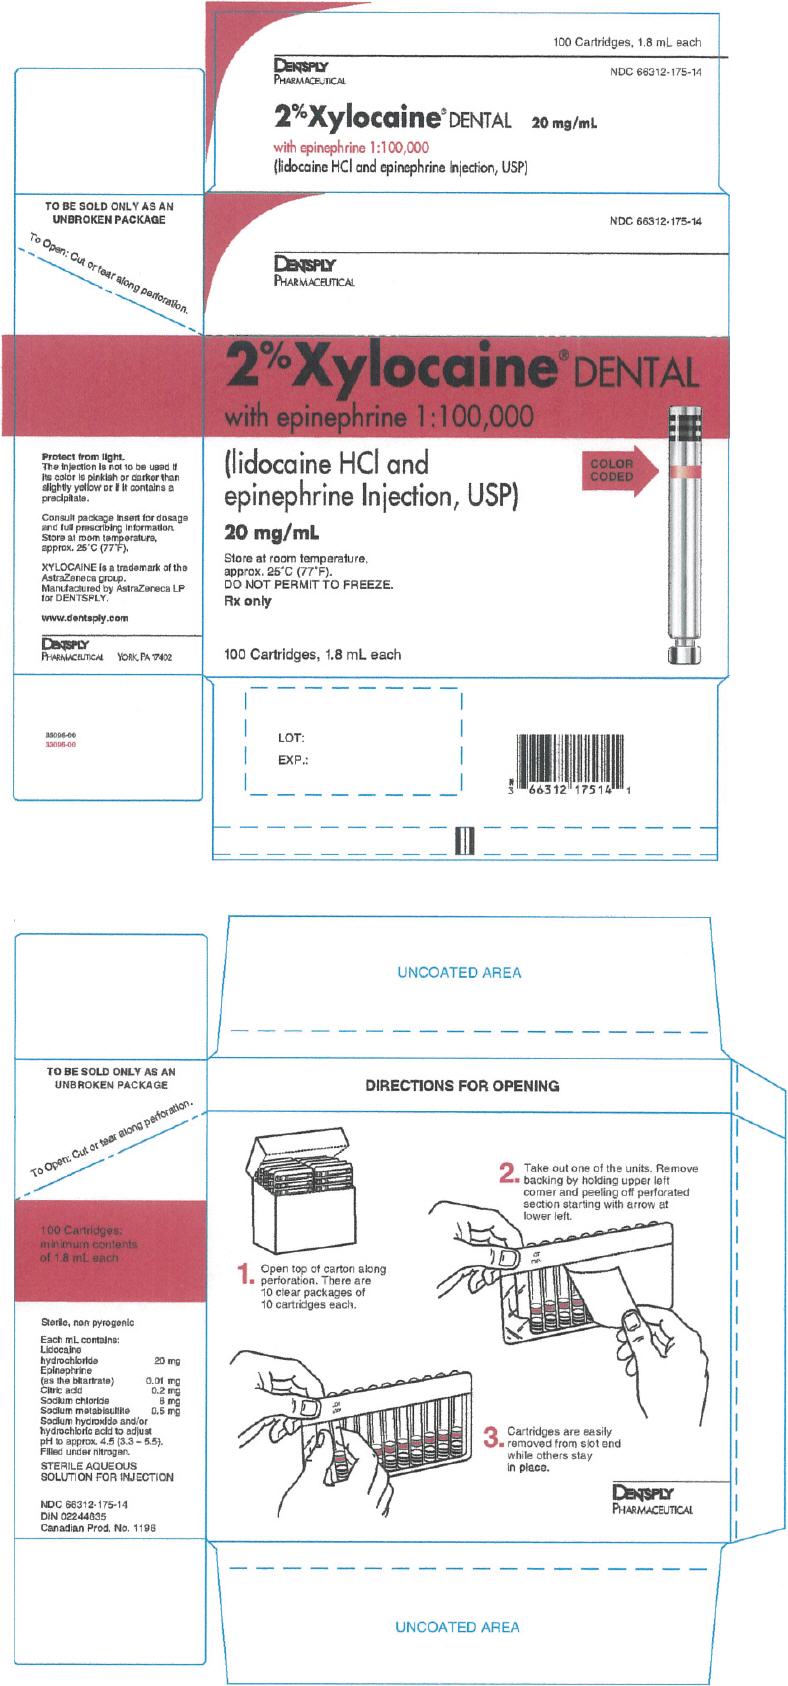 PRINCIPAL DISPLAY PANEL - 1.8 mL Cartridge Carton (Red)